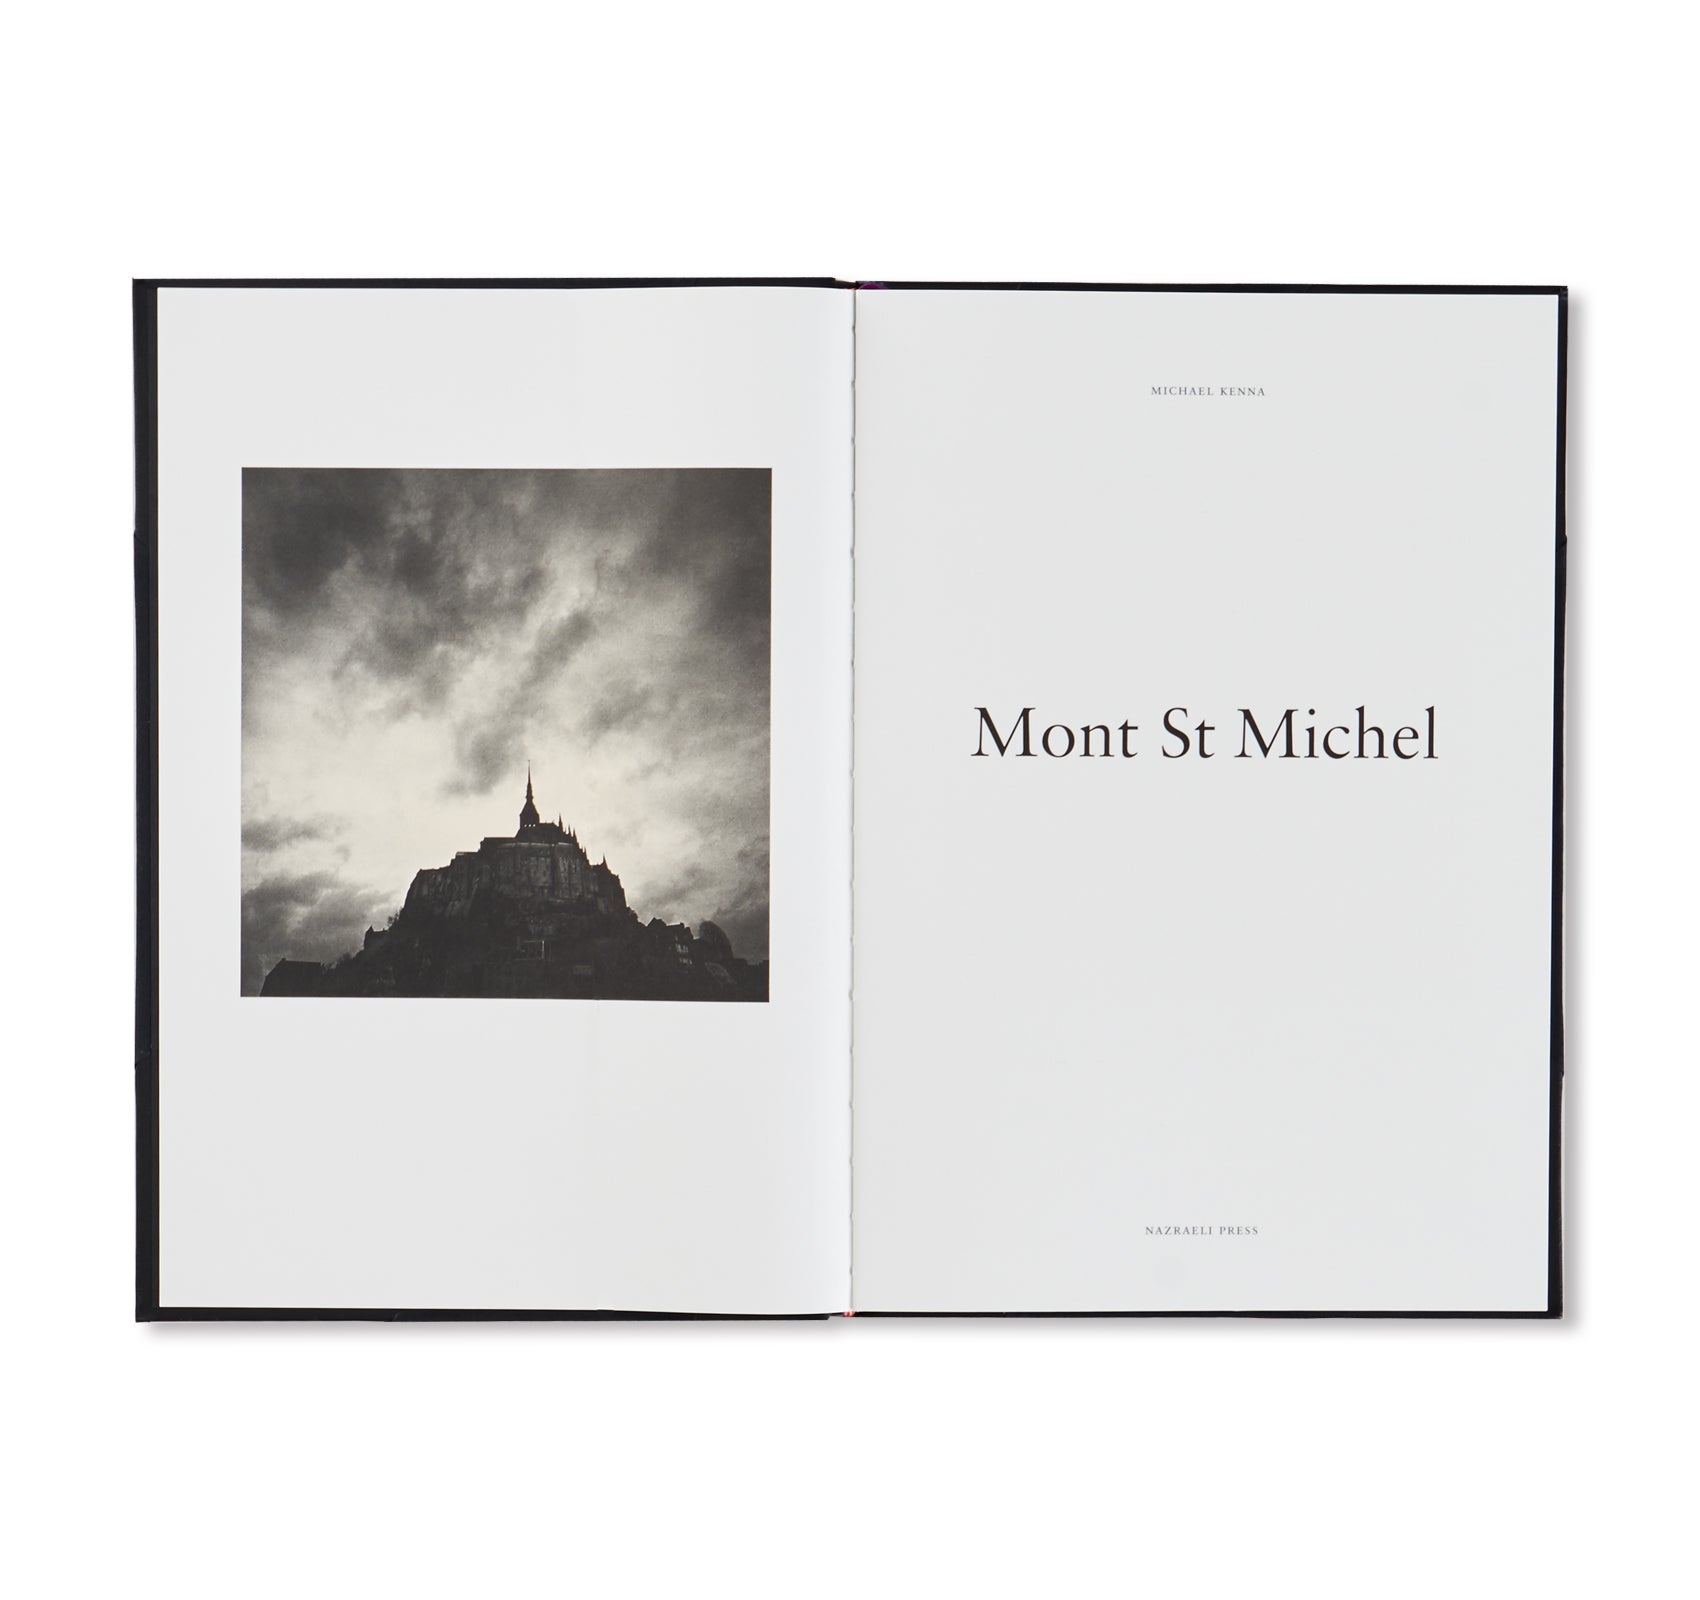 MONT ST MICHEL by Michael Kenna